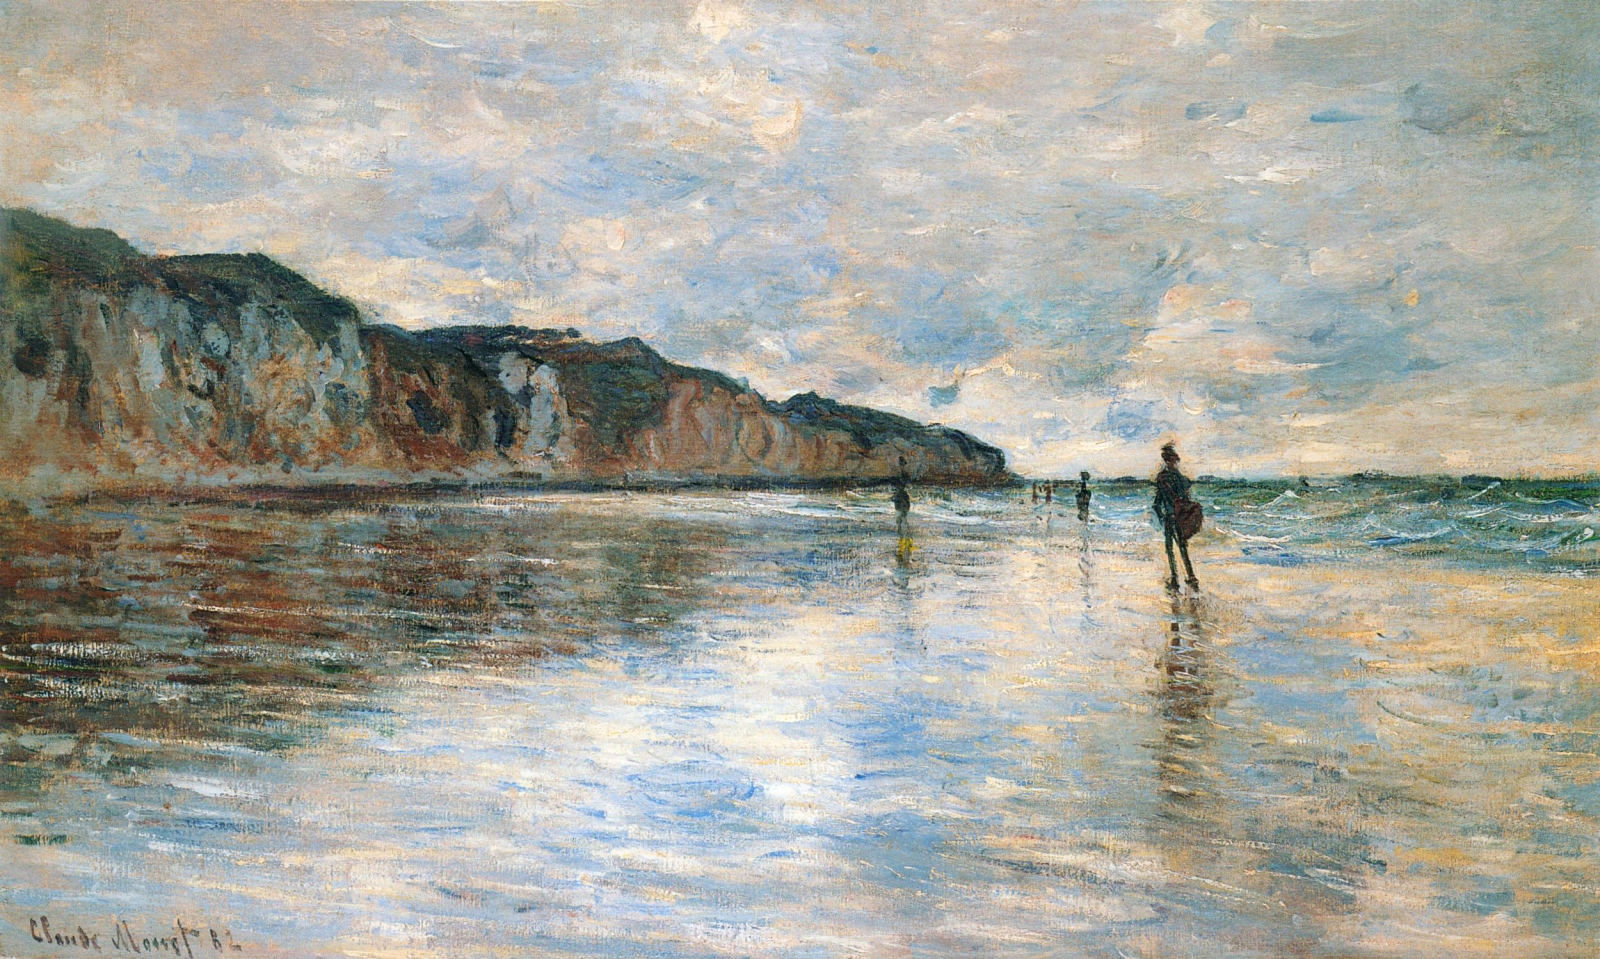 Claude+Monet-1840-1926 (525).jpg